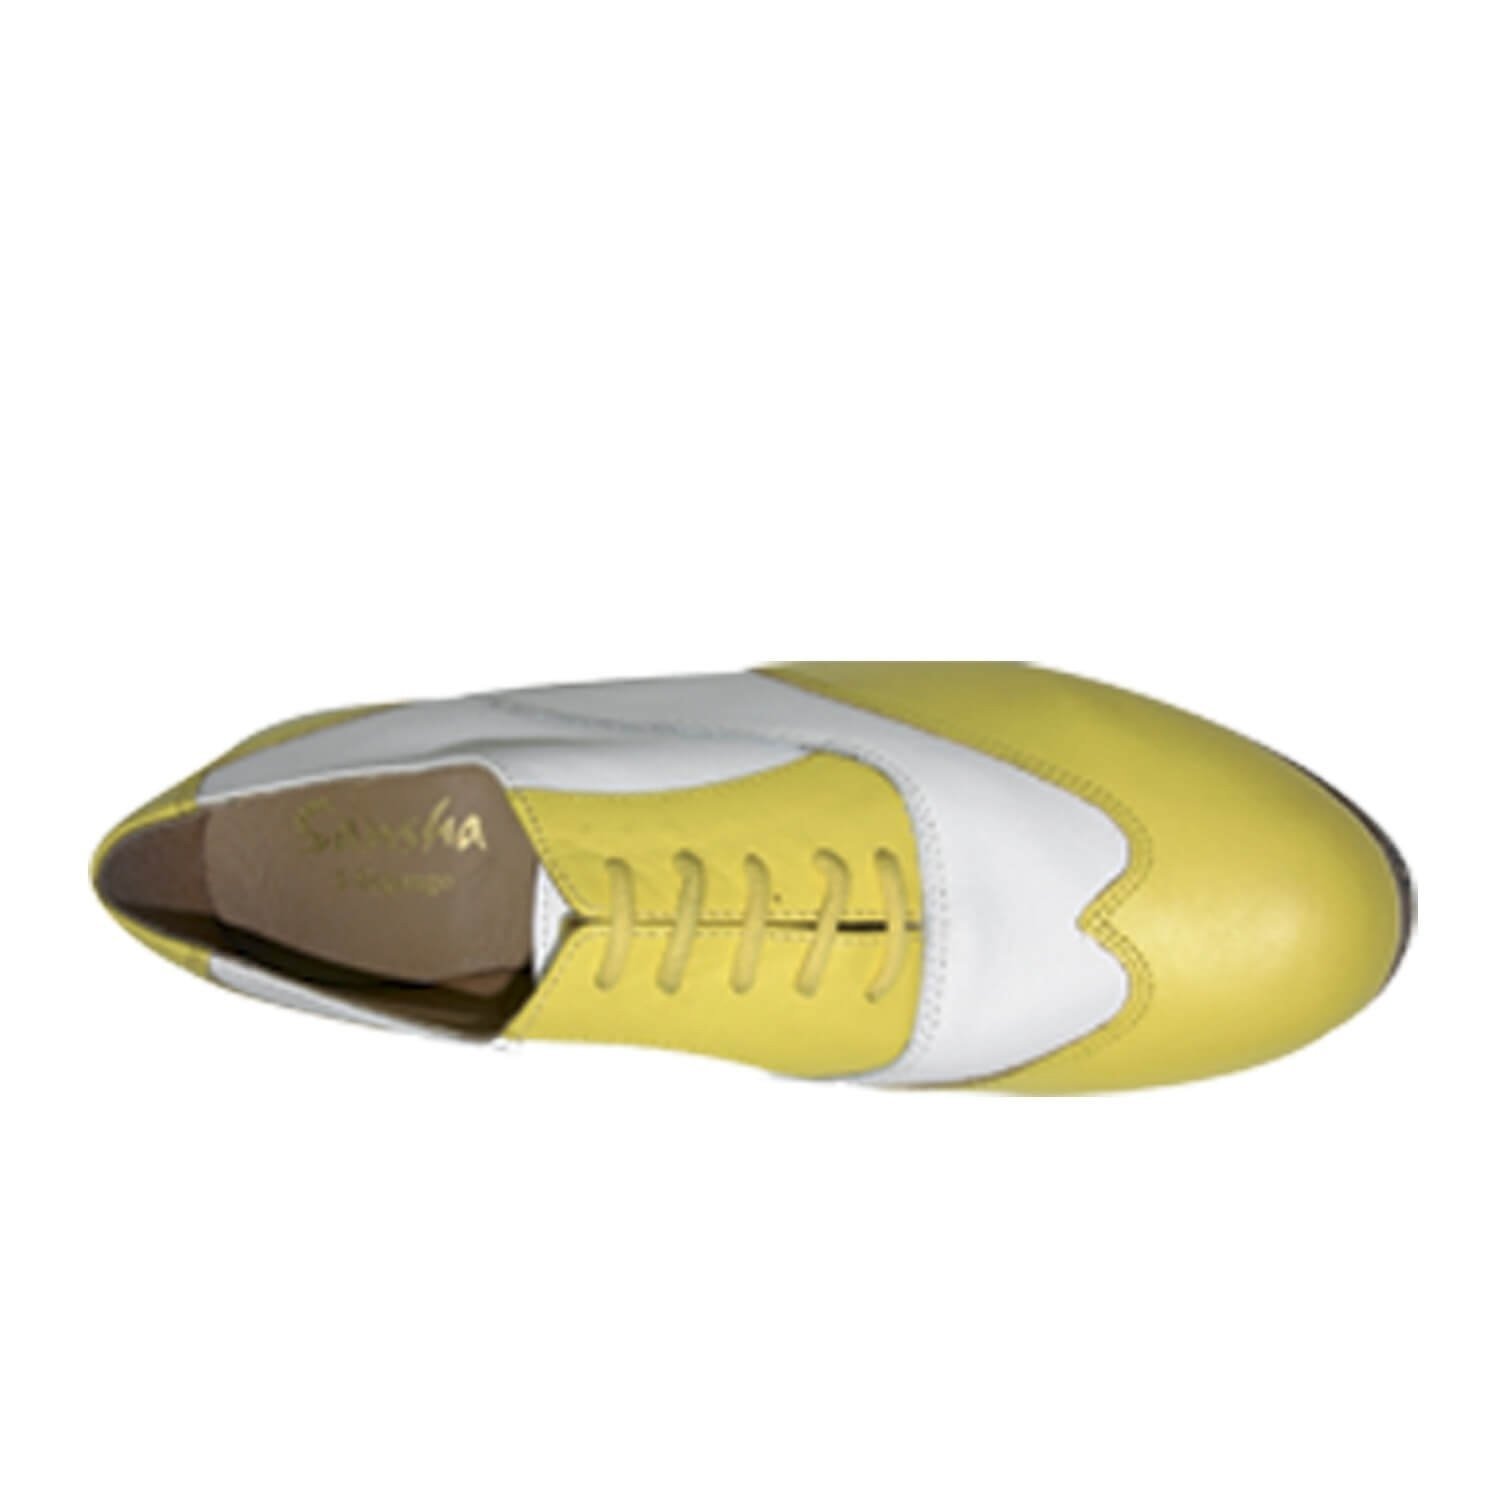 Sansha TA88L Leather Two-Tone Tap Shoes - Click Image to Close